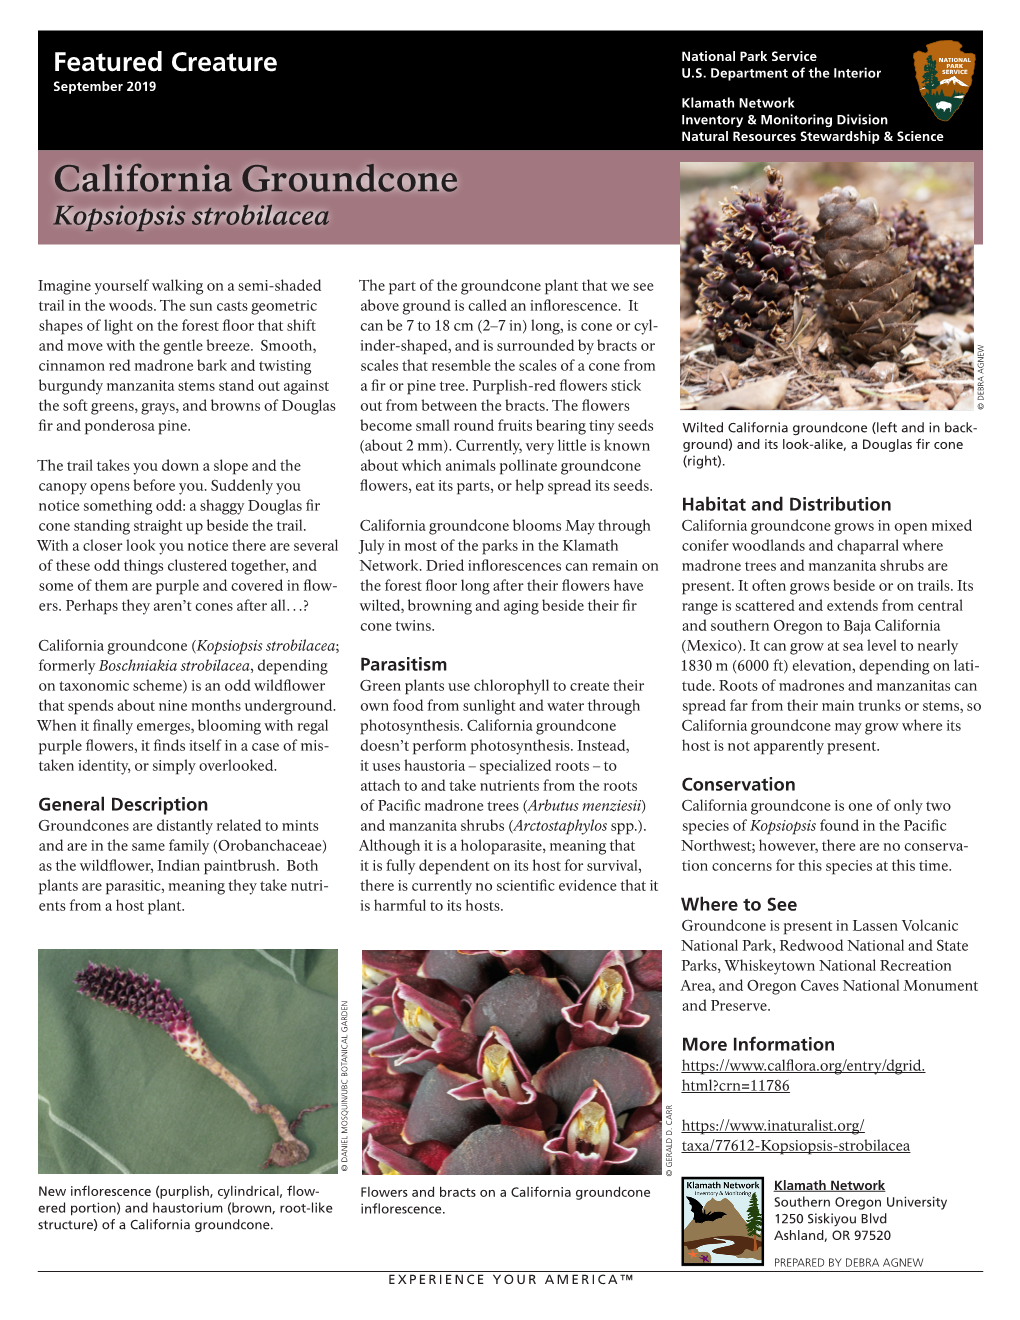 California Groundcone Kopsiopsis Strobilacea